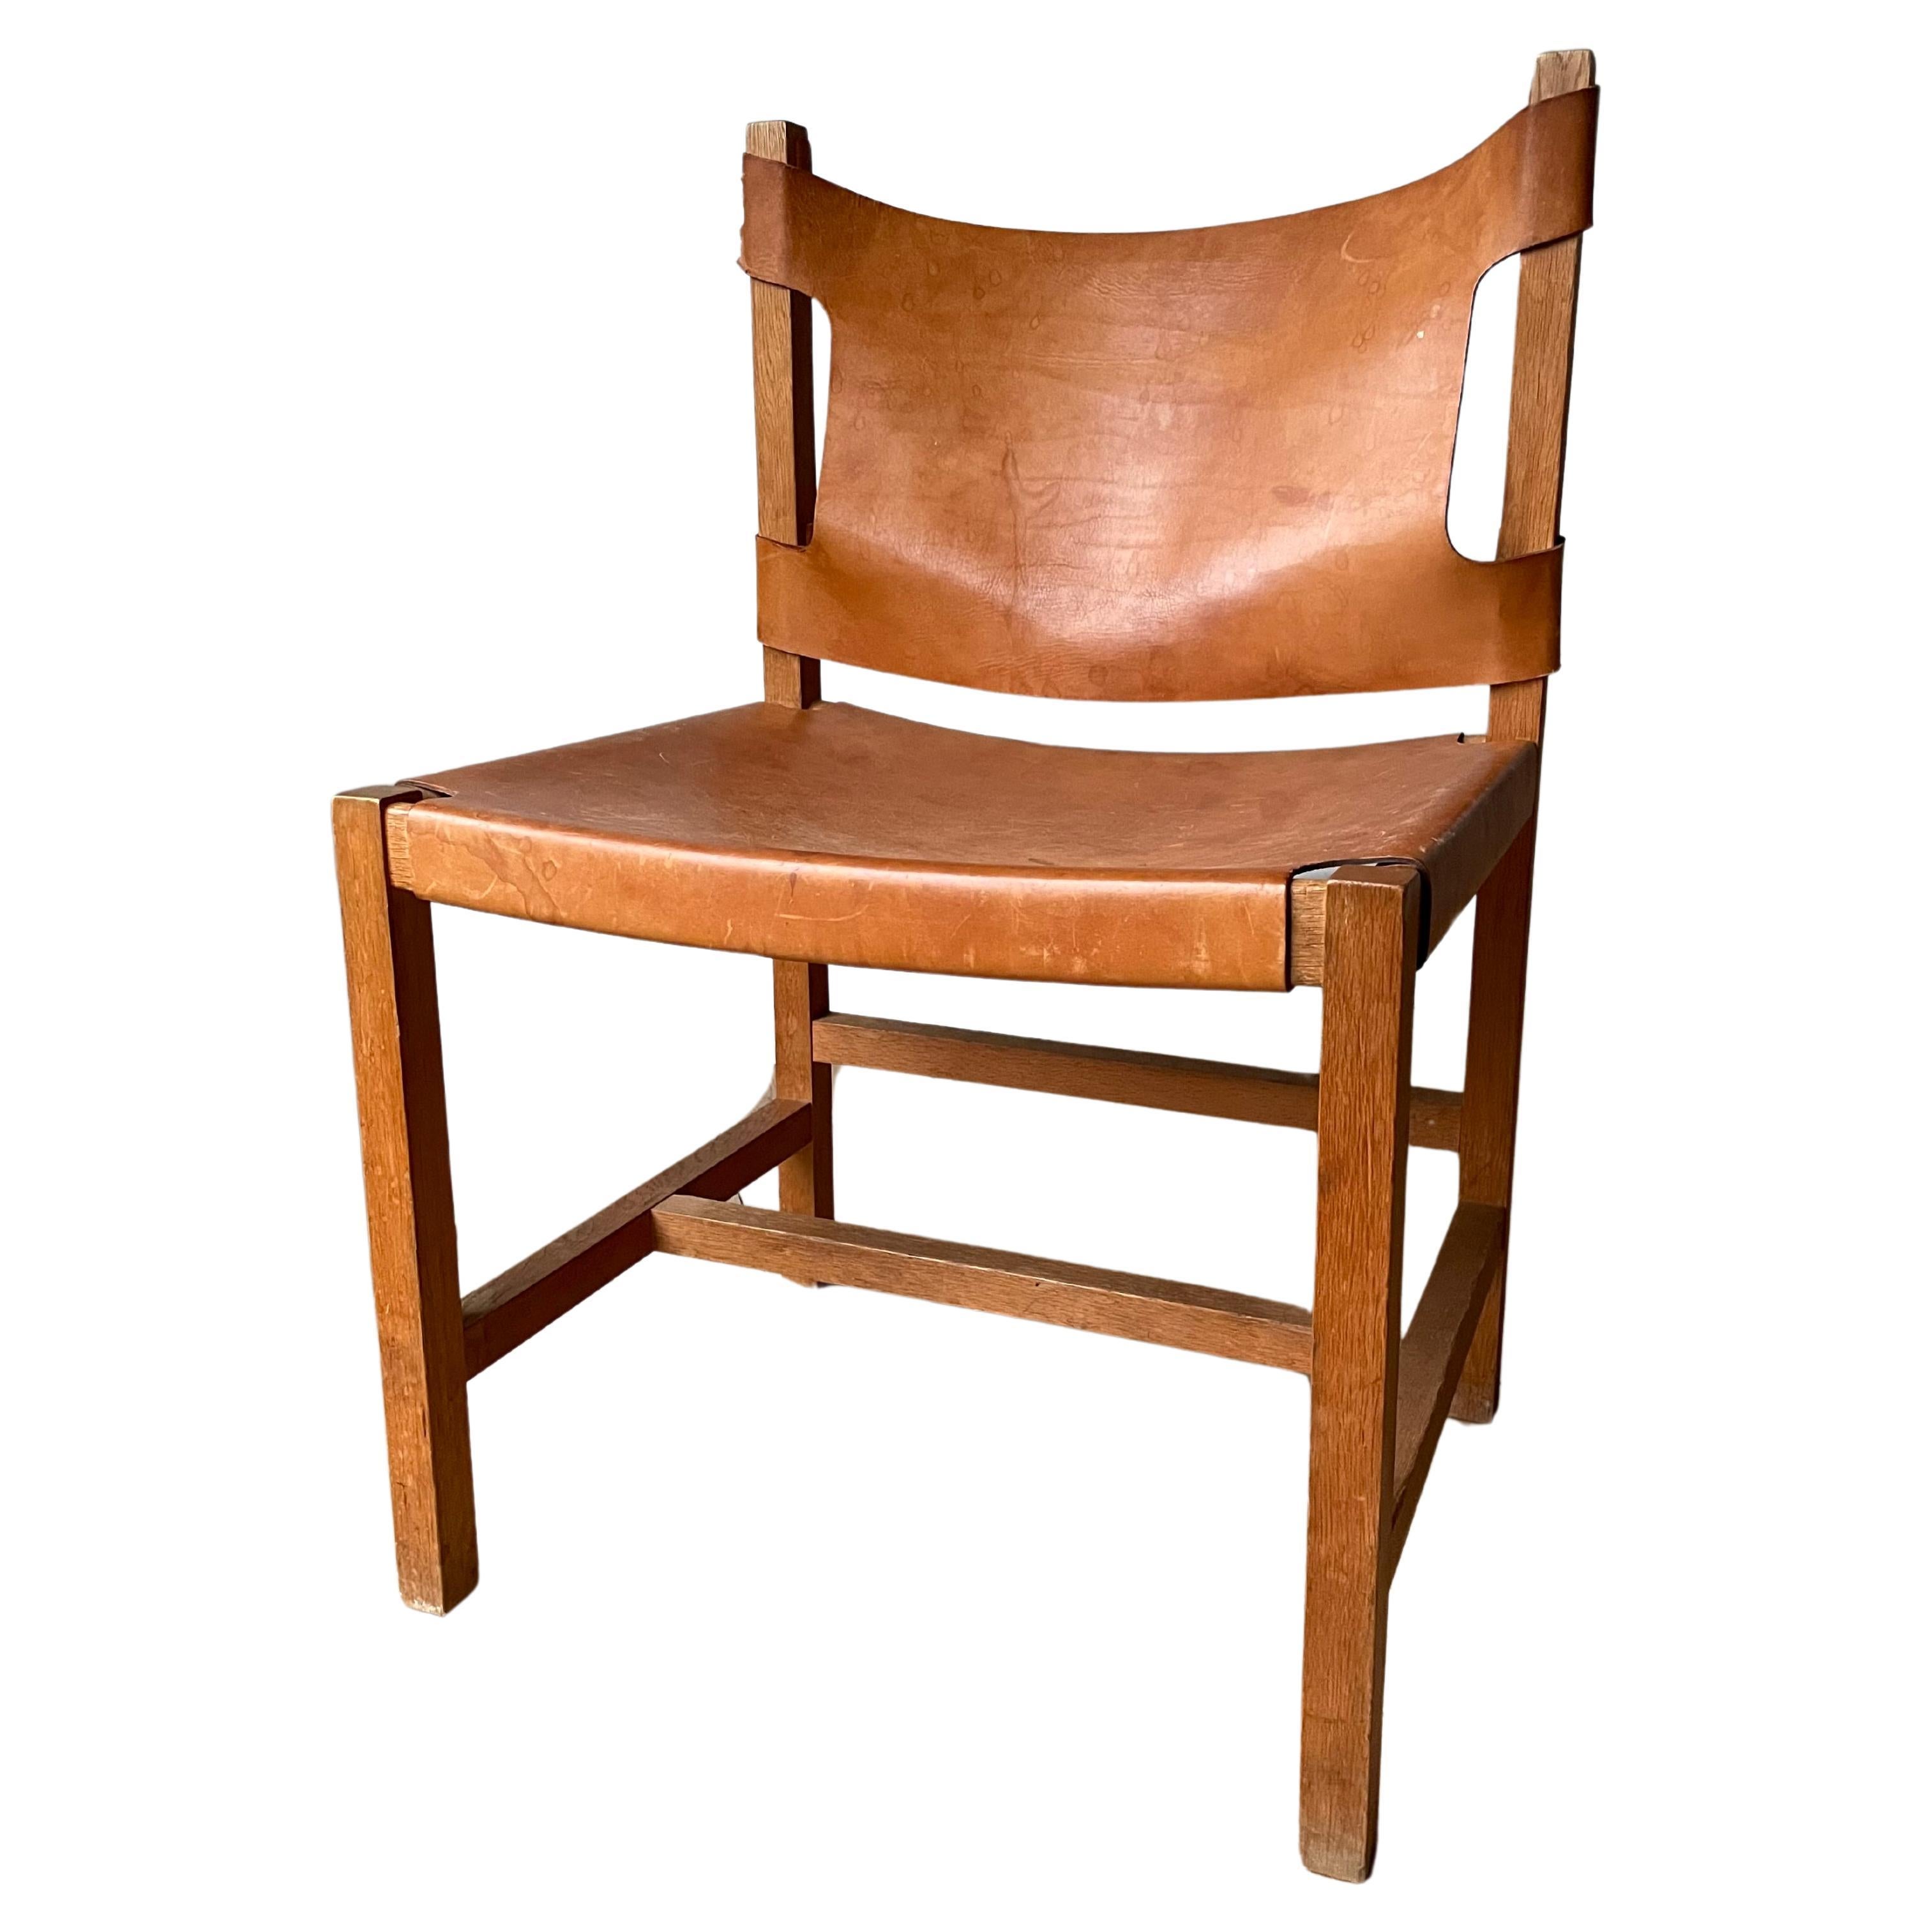 Chaise d'assise danoise moderne en bois, années 1960